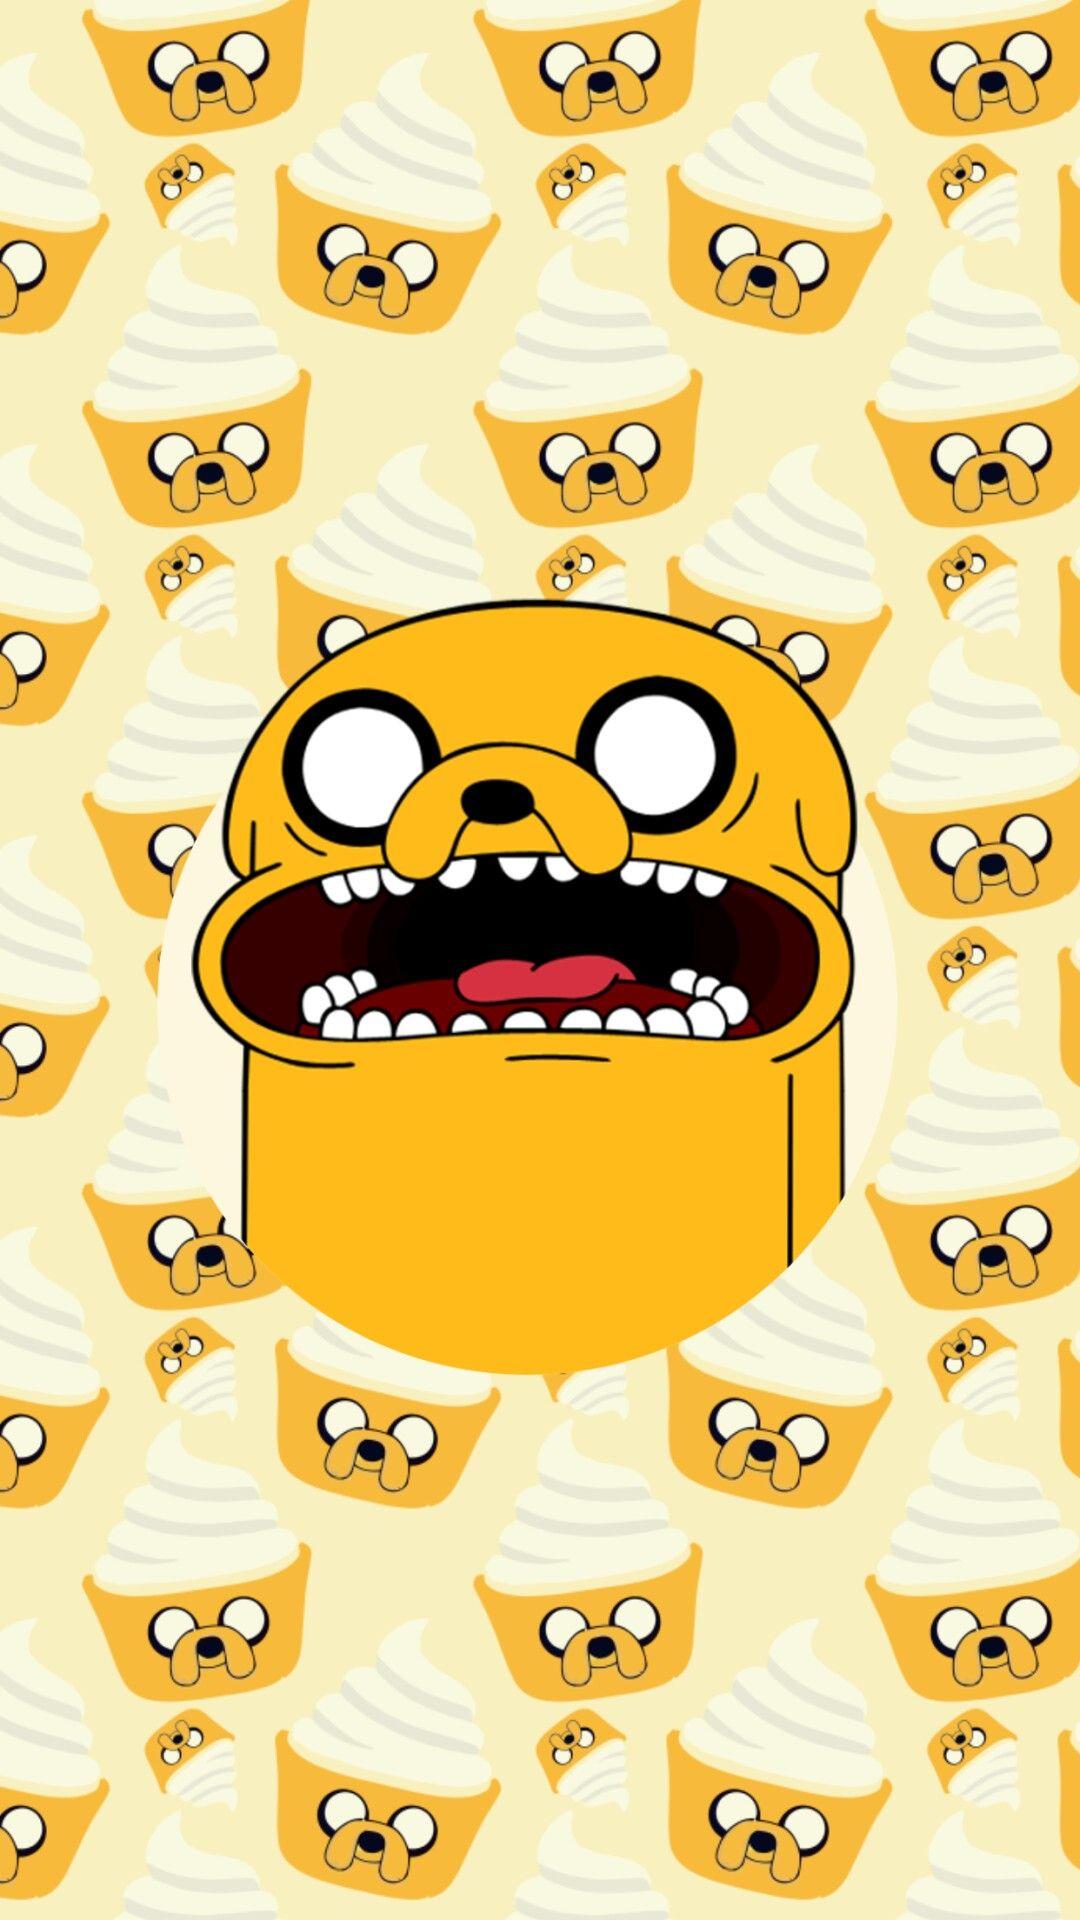 Adventure Time Wallpaper iPhone 6 plus. Ispiration